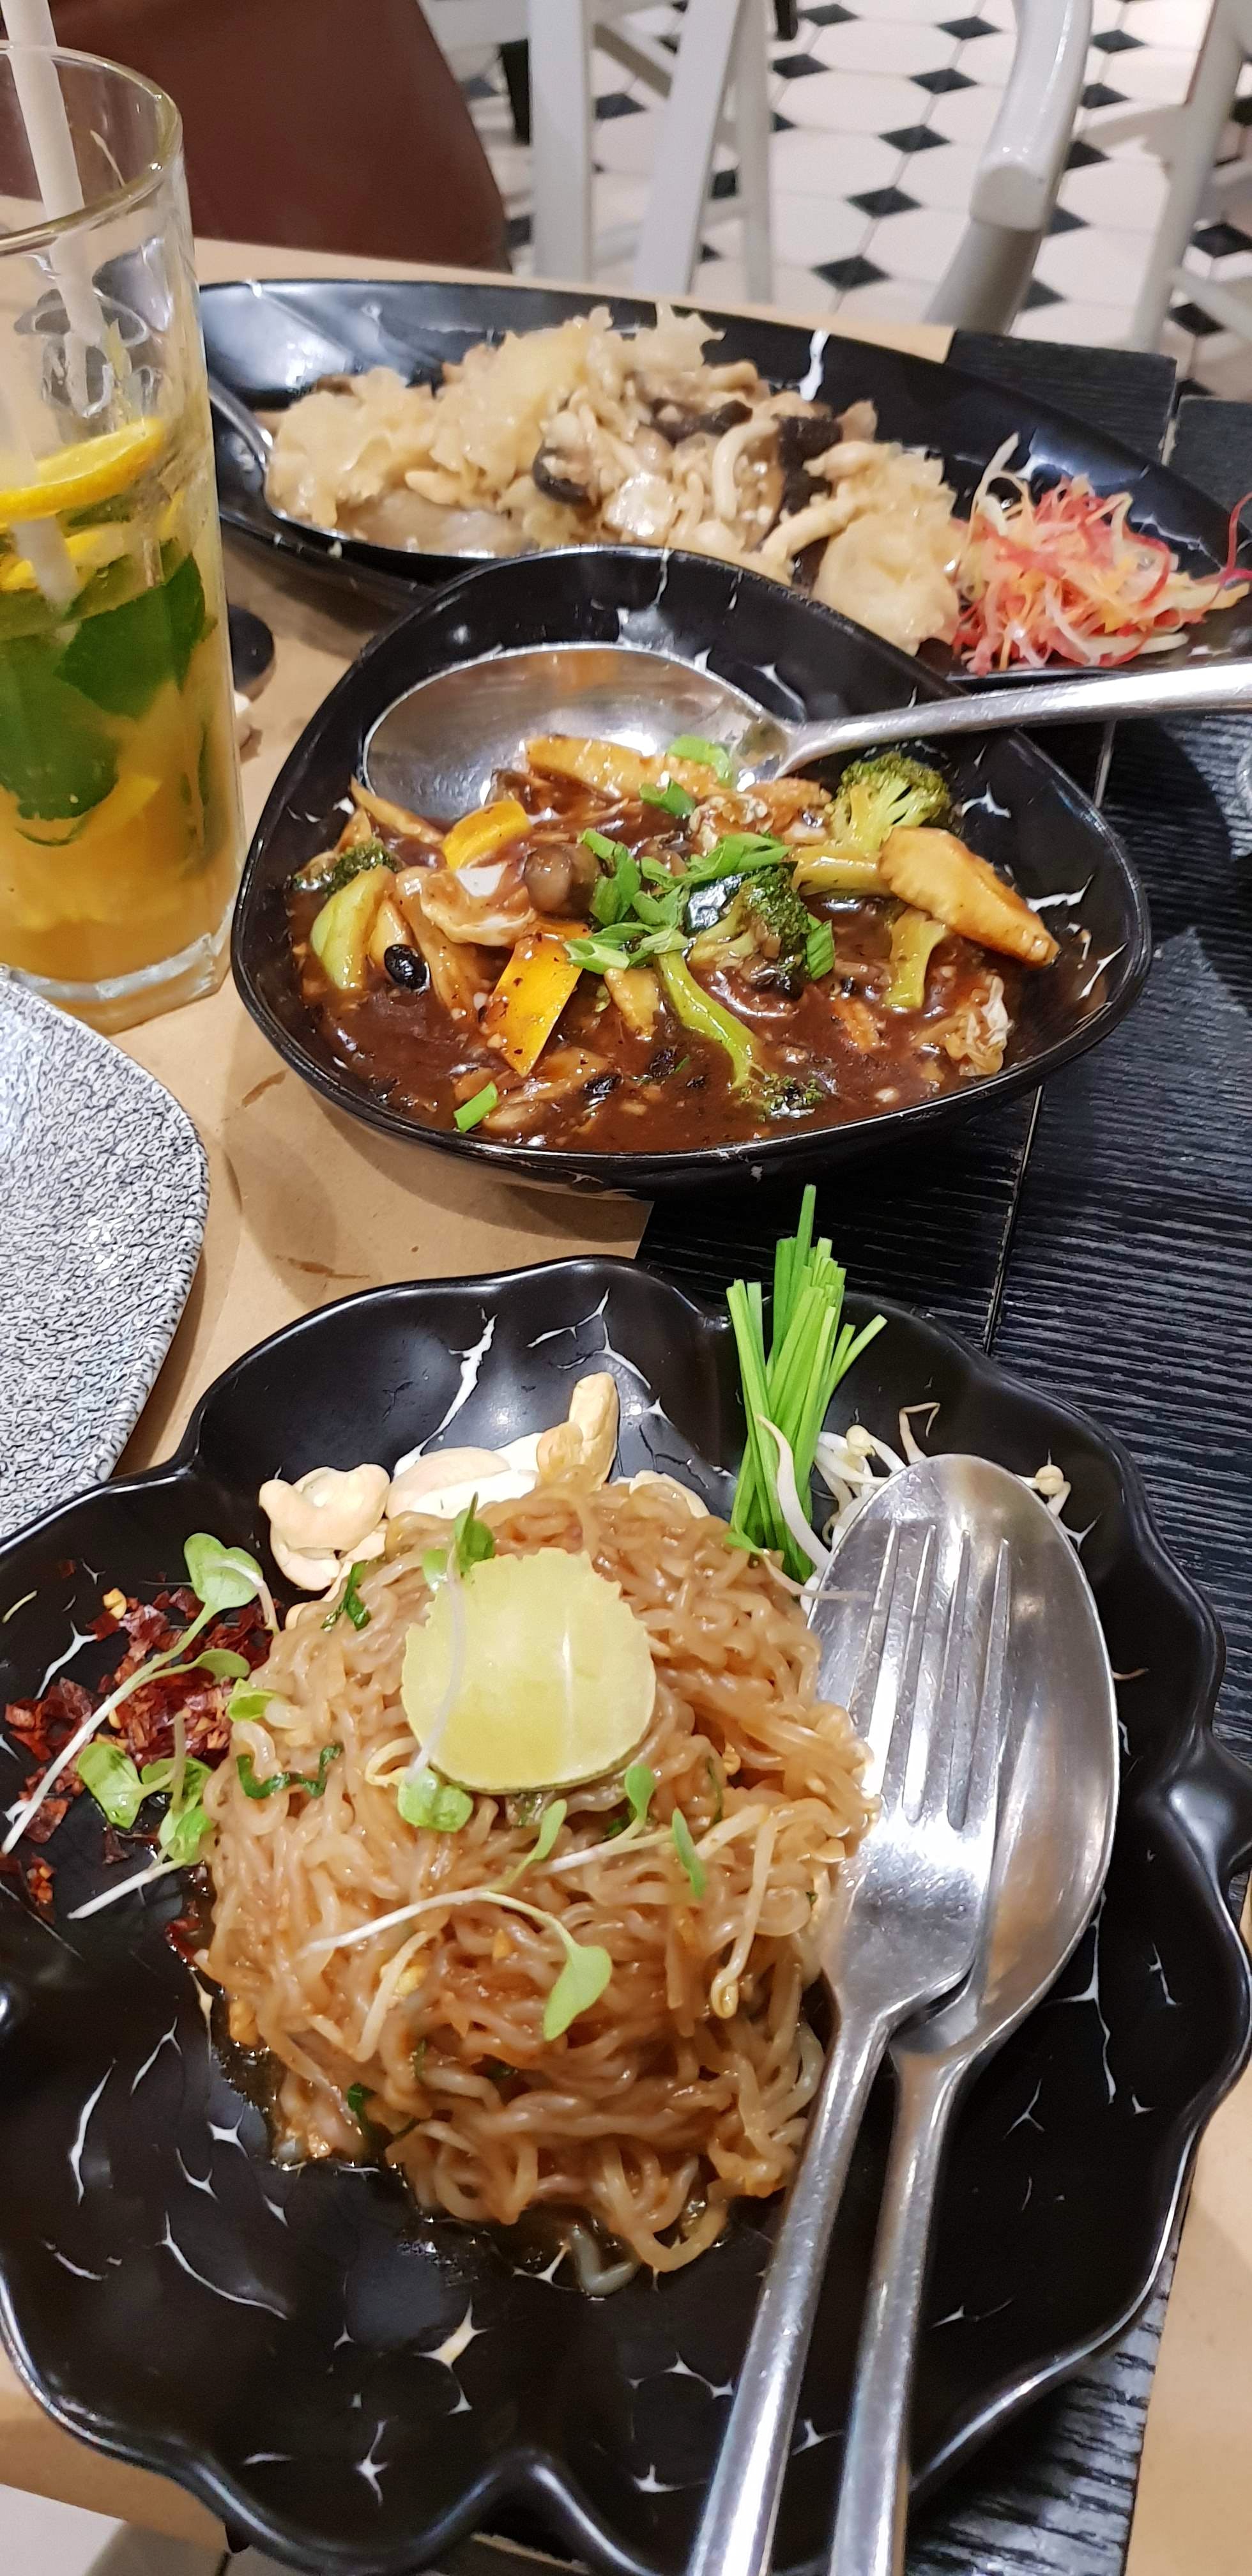 Dish,Food,Cuisine,Ingredient,Pad thai,Pancit,Rice noodles,Produce,Chinese food,Thai food